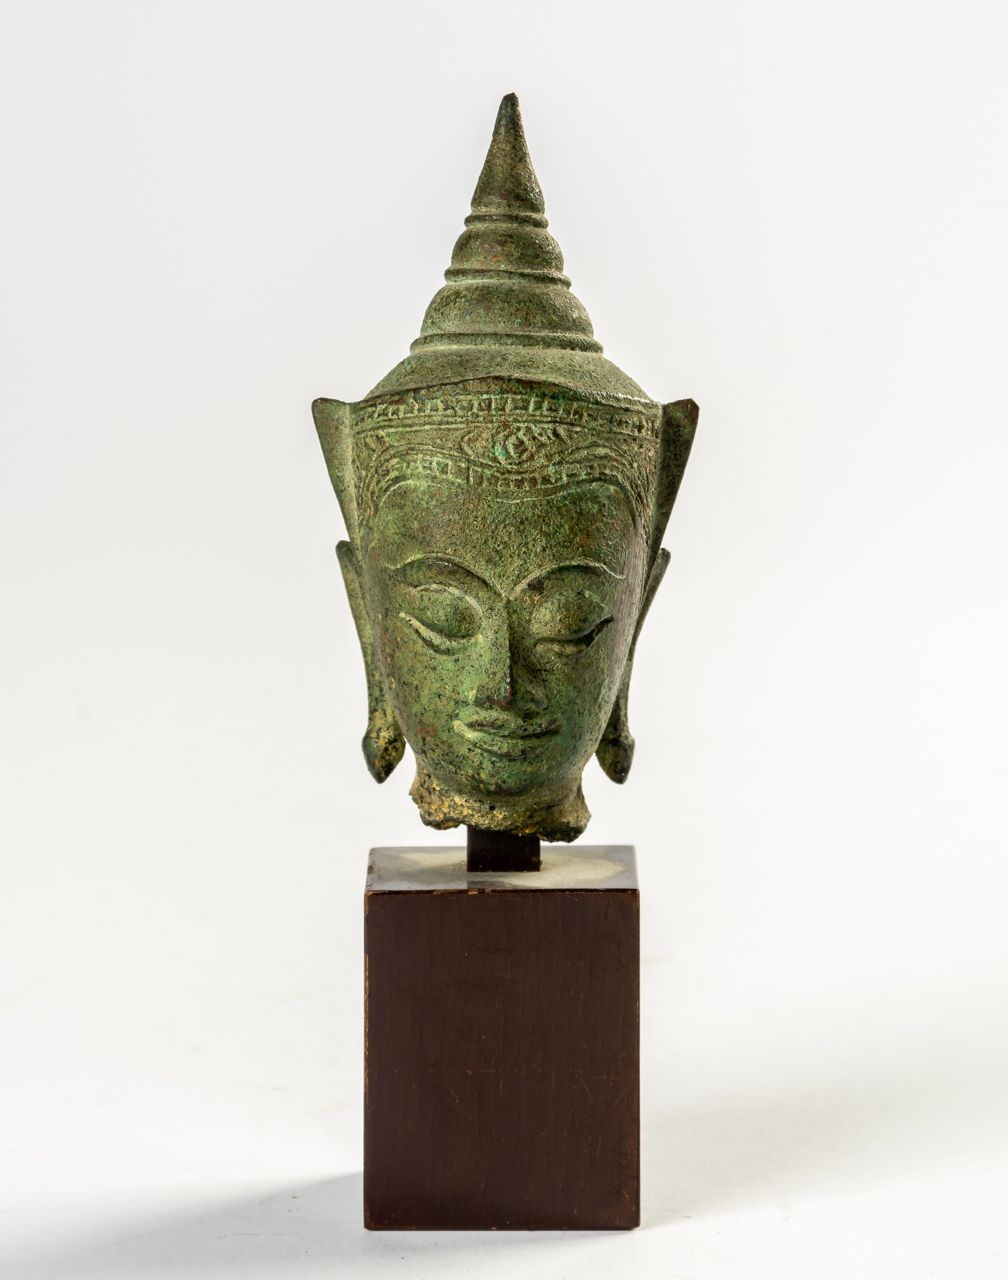 BUDDHA-KOPF 泰国，19世纪或更早

9厘米（不含底座



菩萨的头

泰国，19世纪或更早

9厘米（不含支架